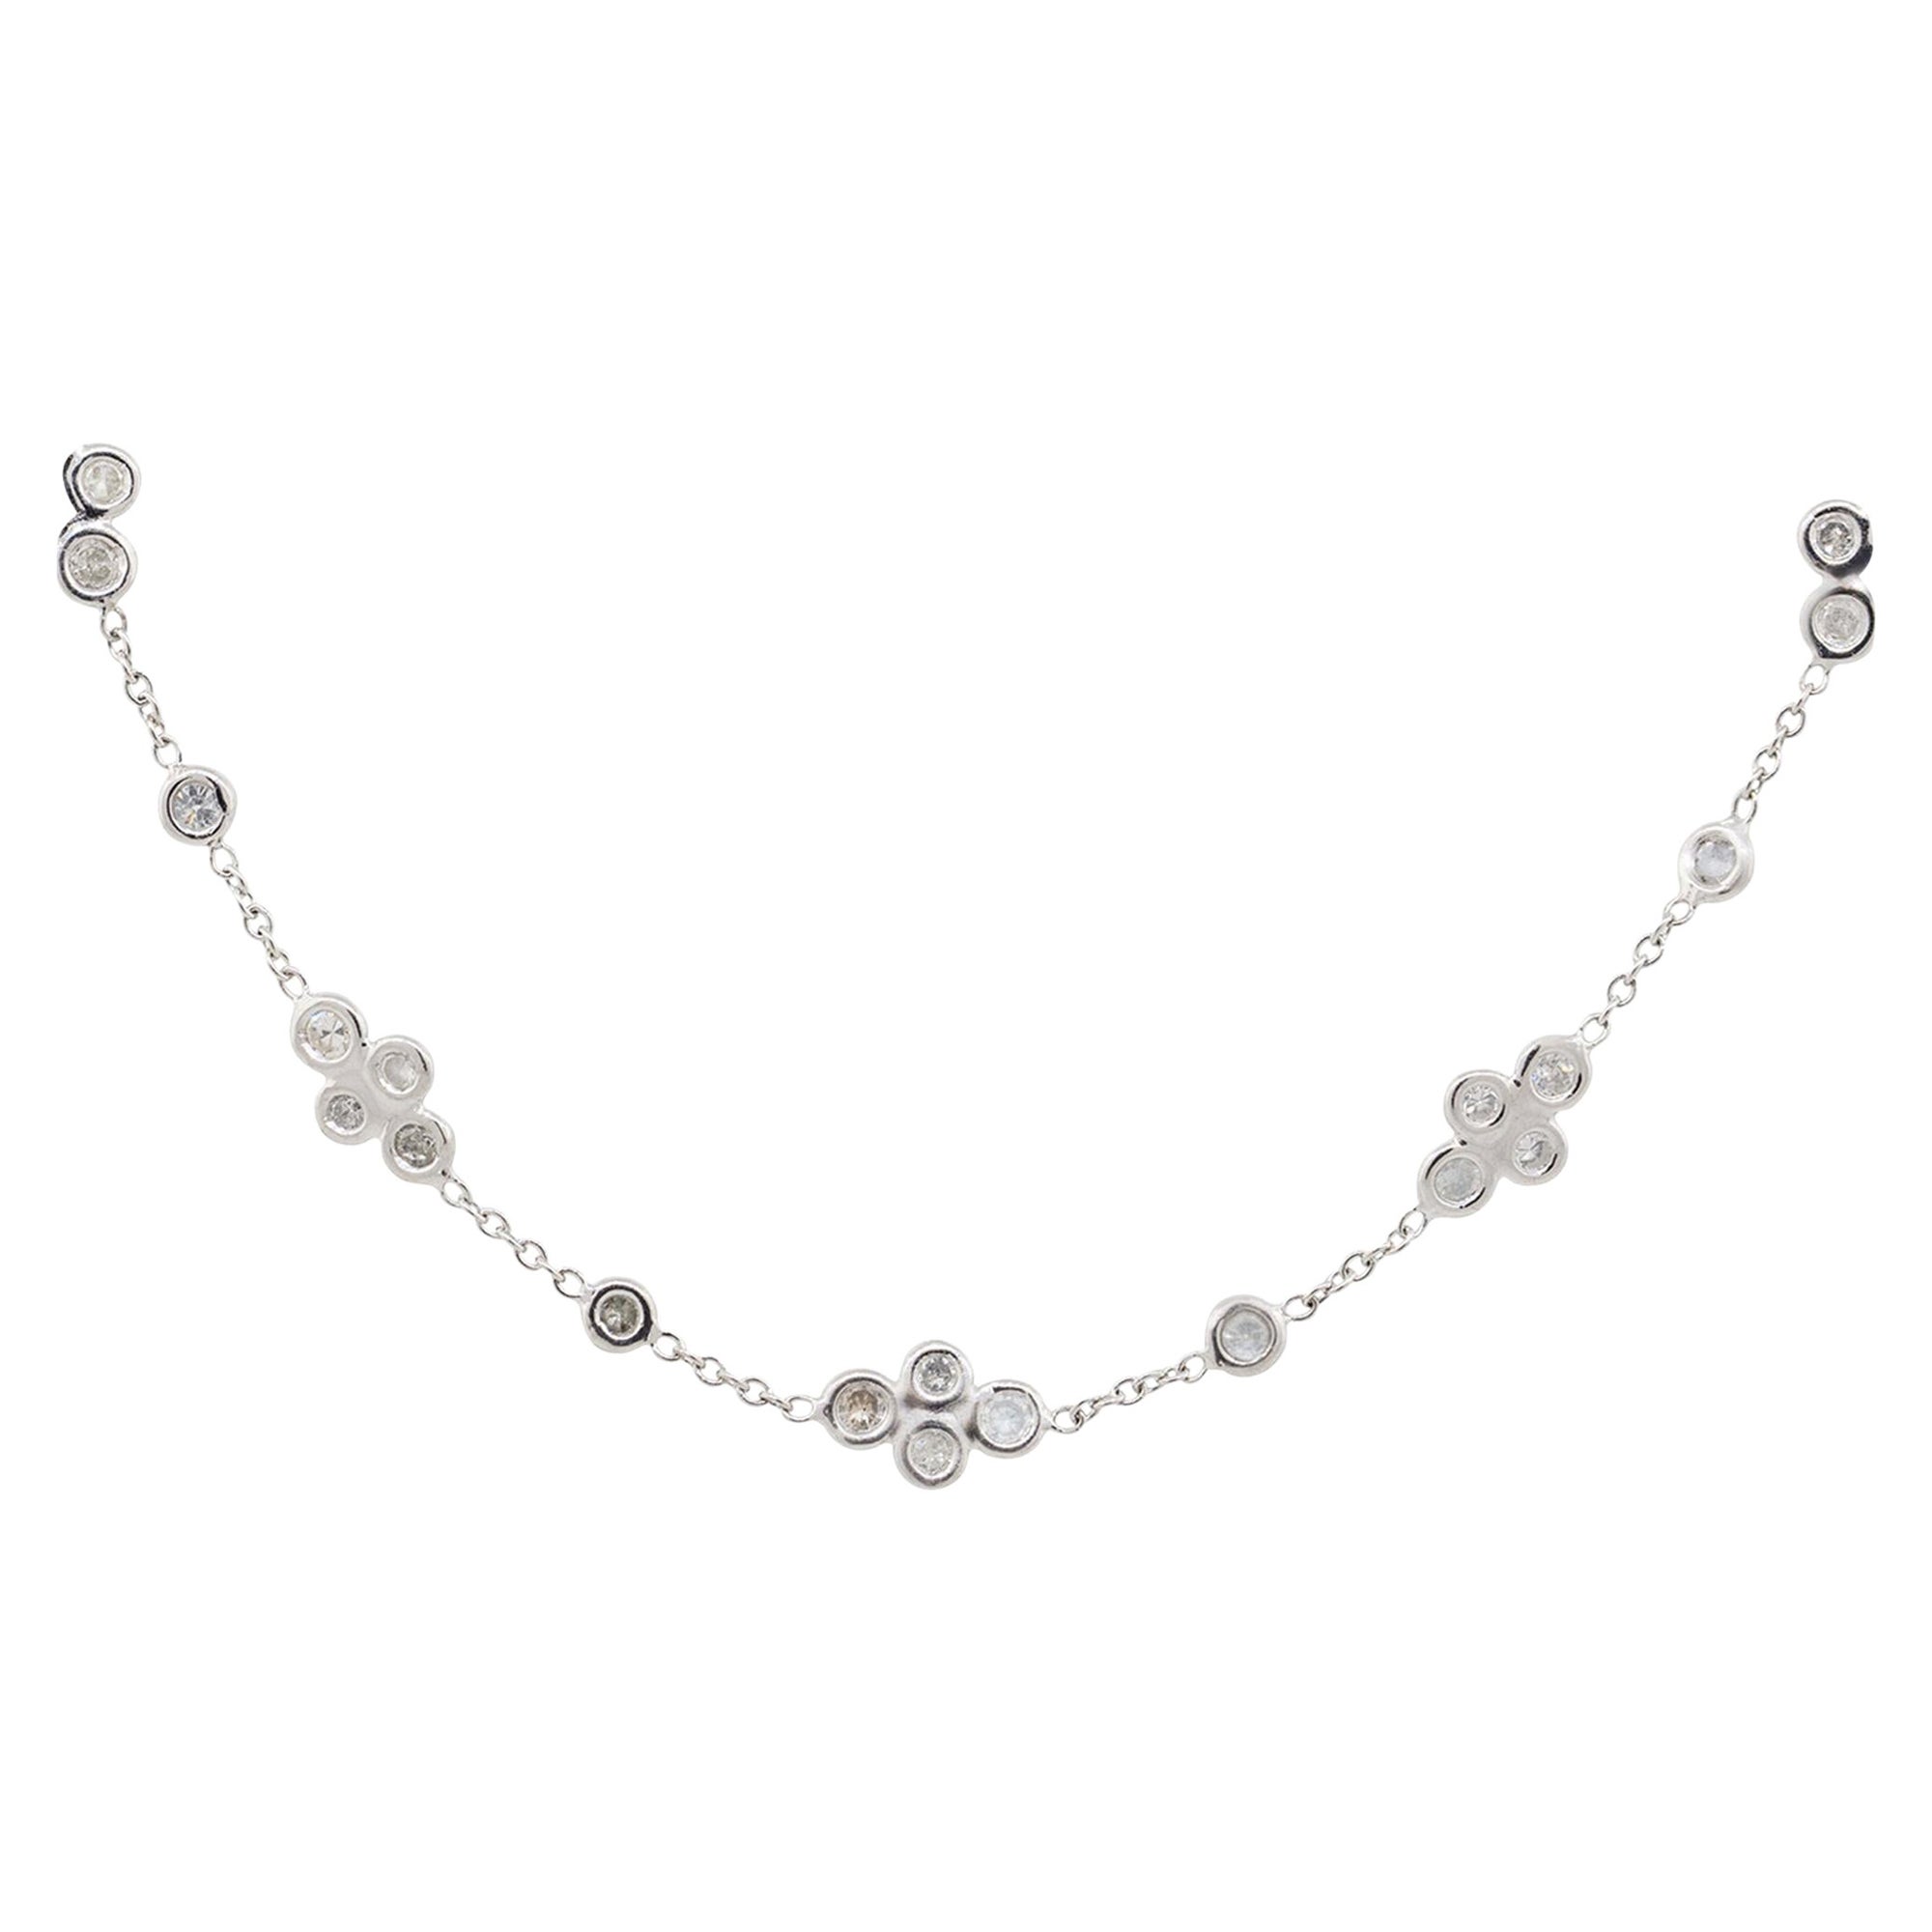 2.18 Carat Diamond Floral Necklace 18 Karat in Stock